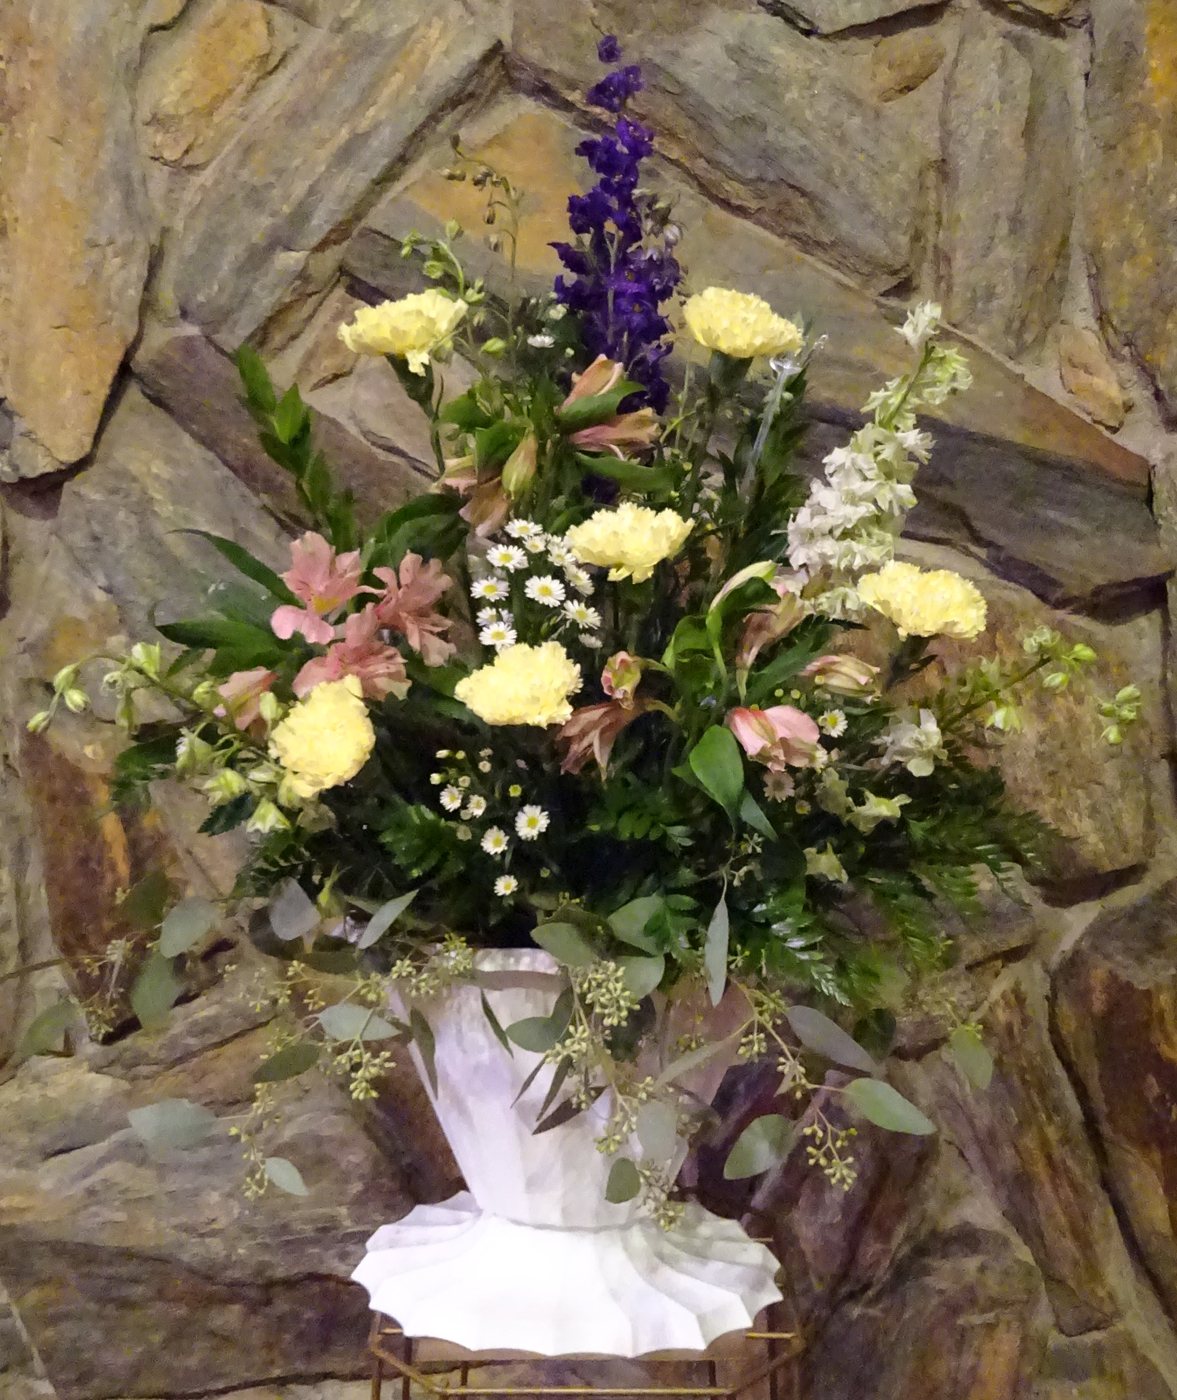 Flowers from Kadoka Area School Board, Administration, and Staff